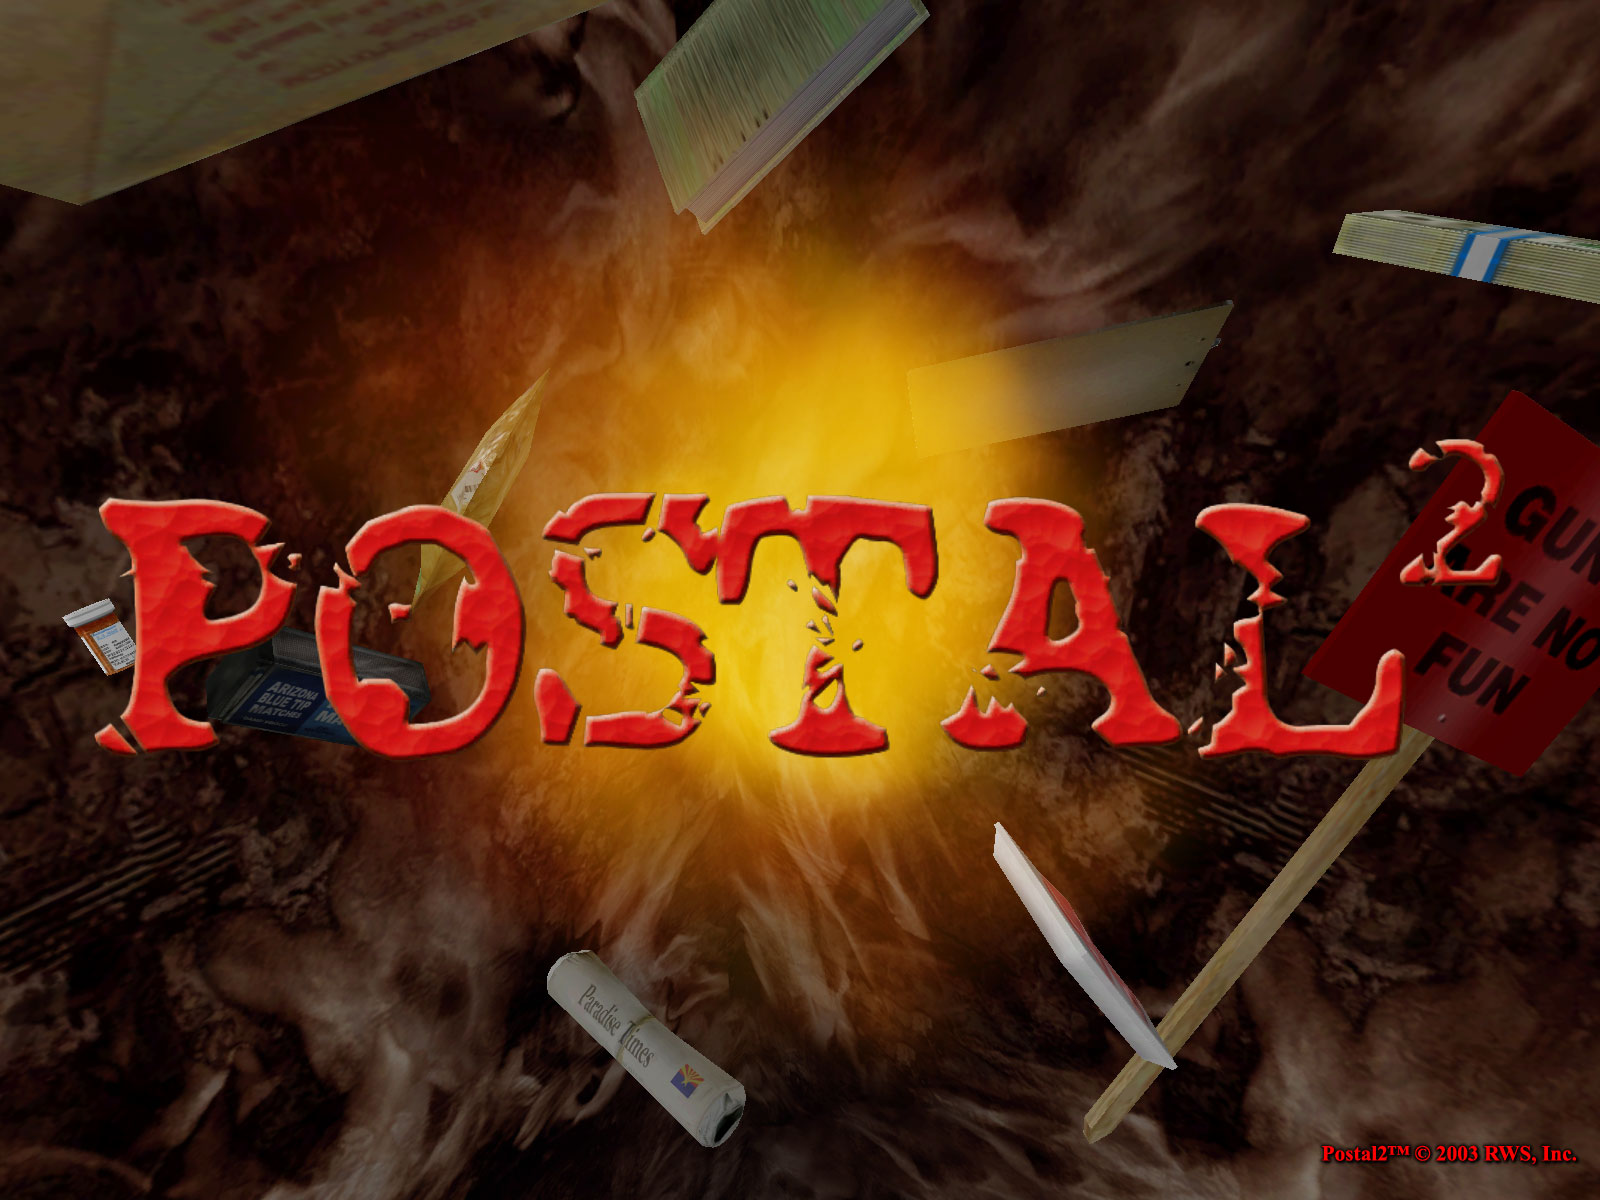 Postal 2 Logo